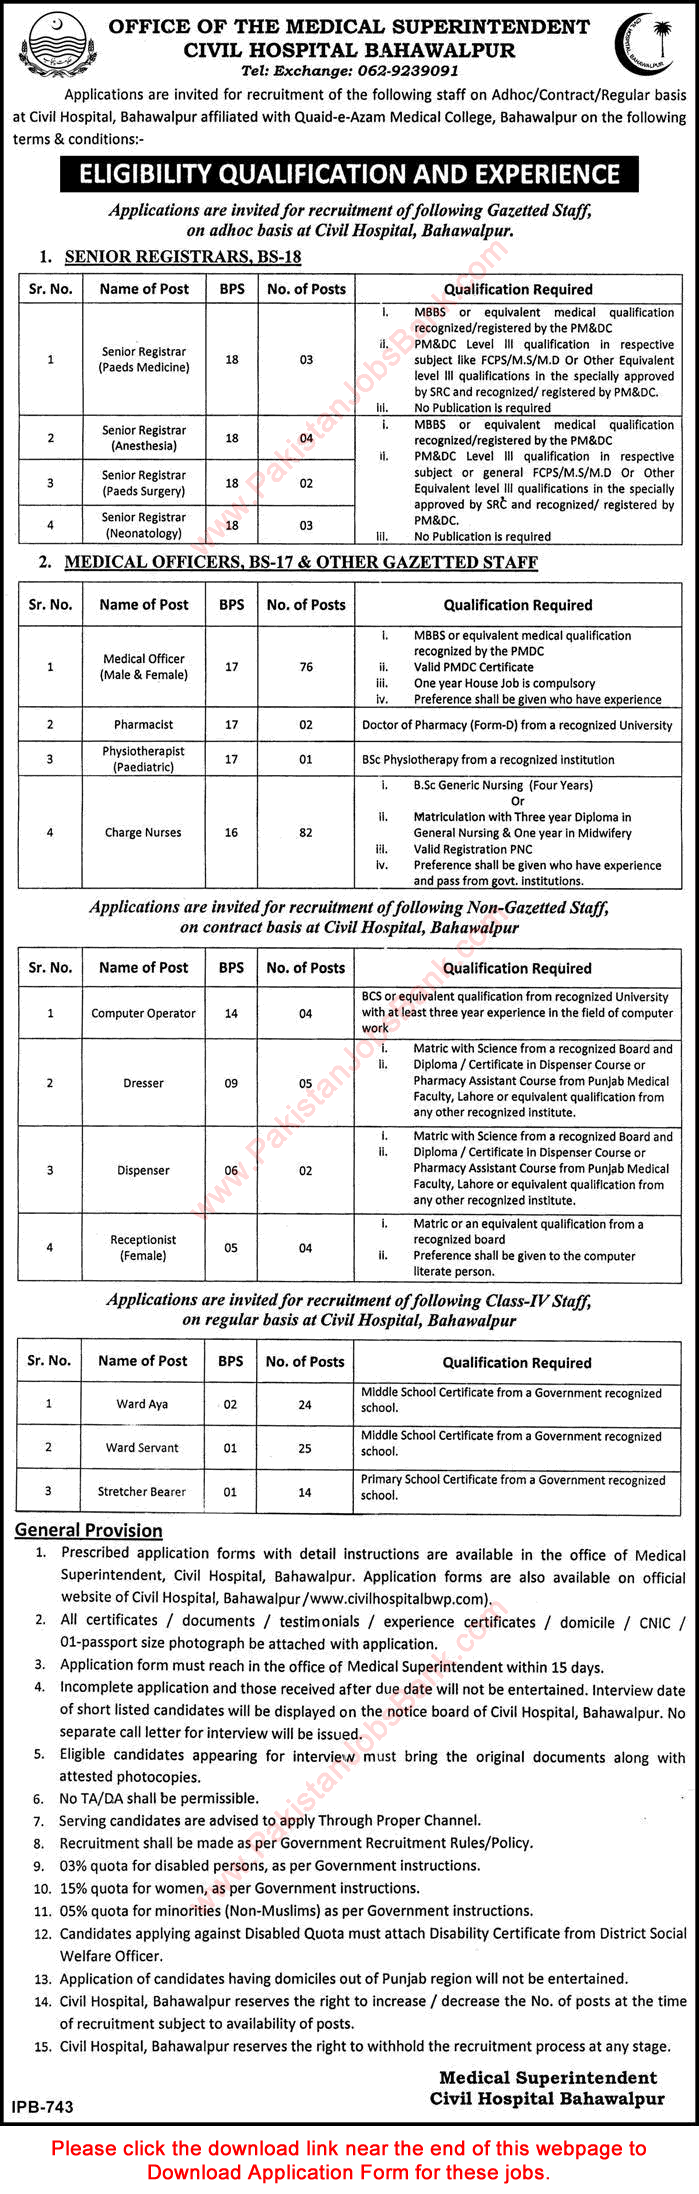 Civil Hospital Bahawalpur Jobs June 2016 Application Form Charge Nurses, Medical Officers & Others Latest